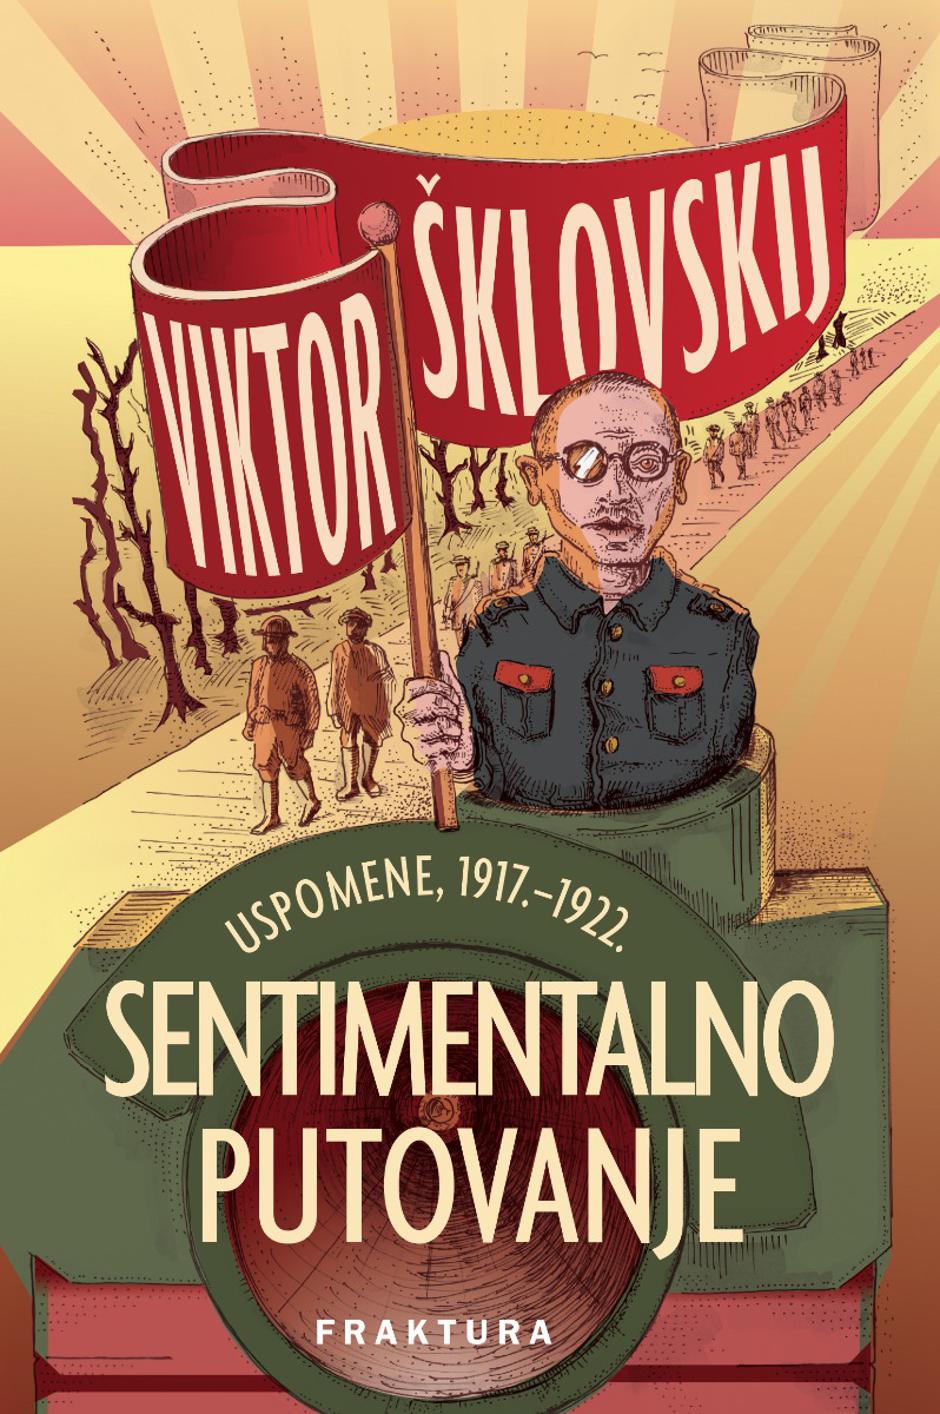 Viktor Šklovskij "Sentimentalno putovanje" | Author: Fraktura